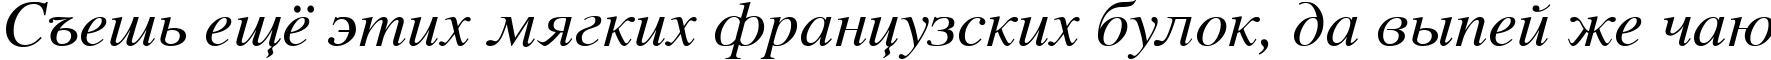 Пример написания шрифтом Vremya Italic текста на русском